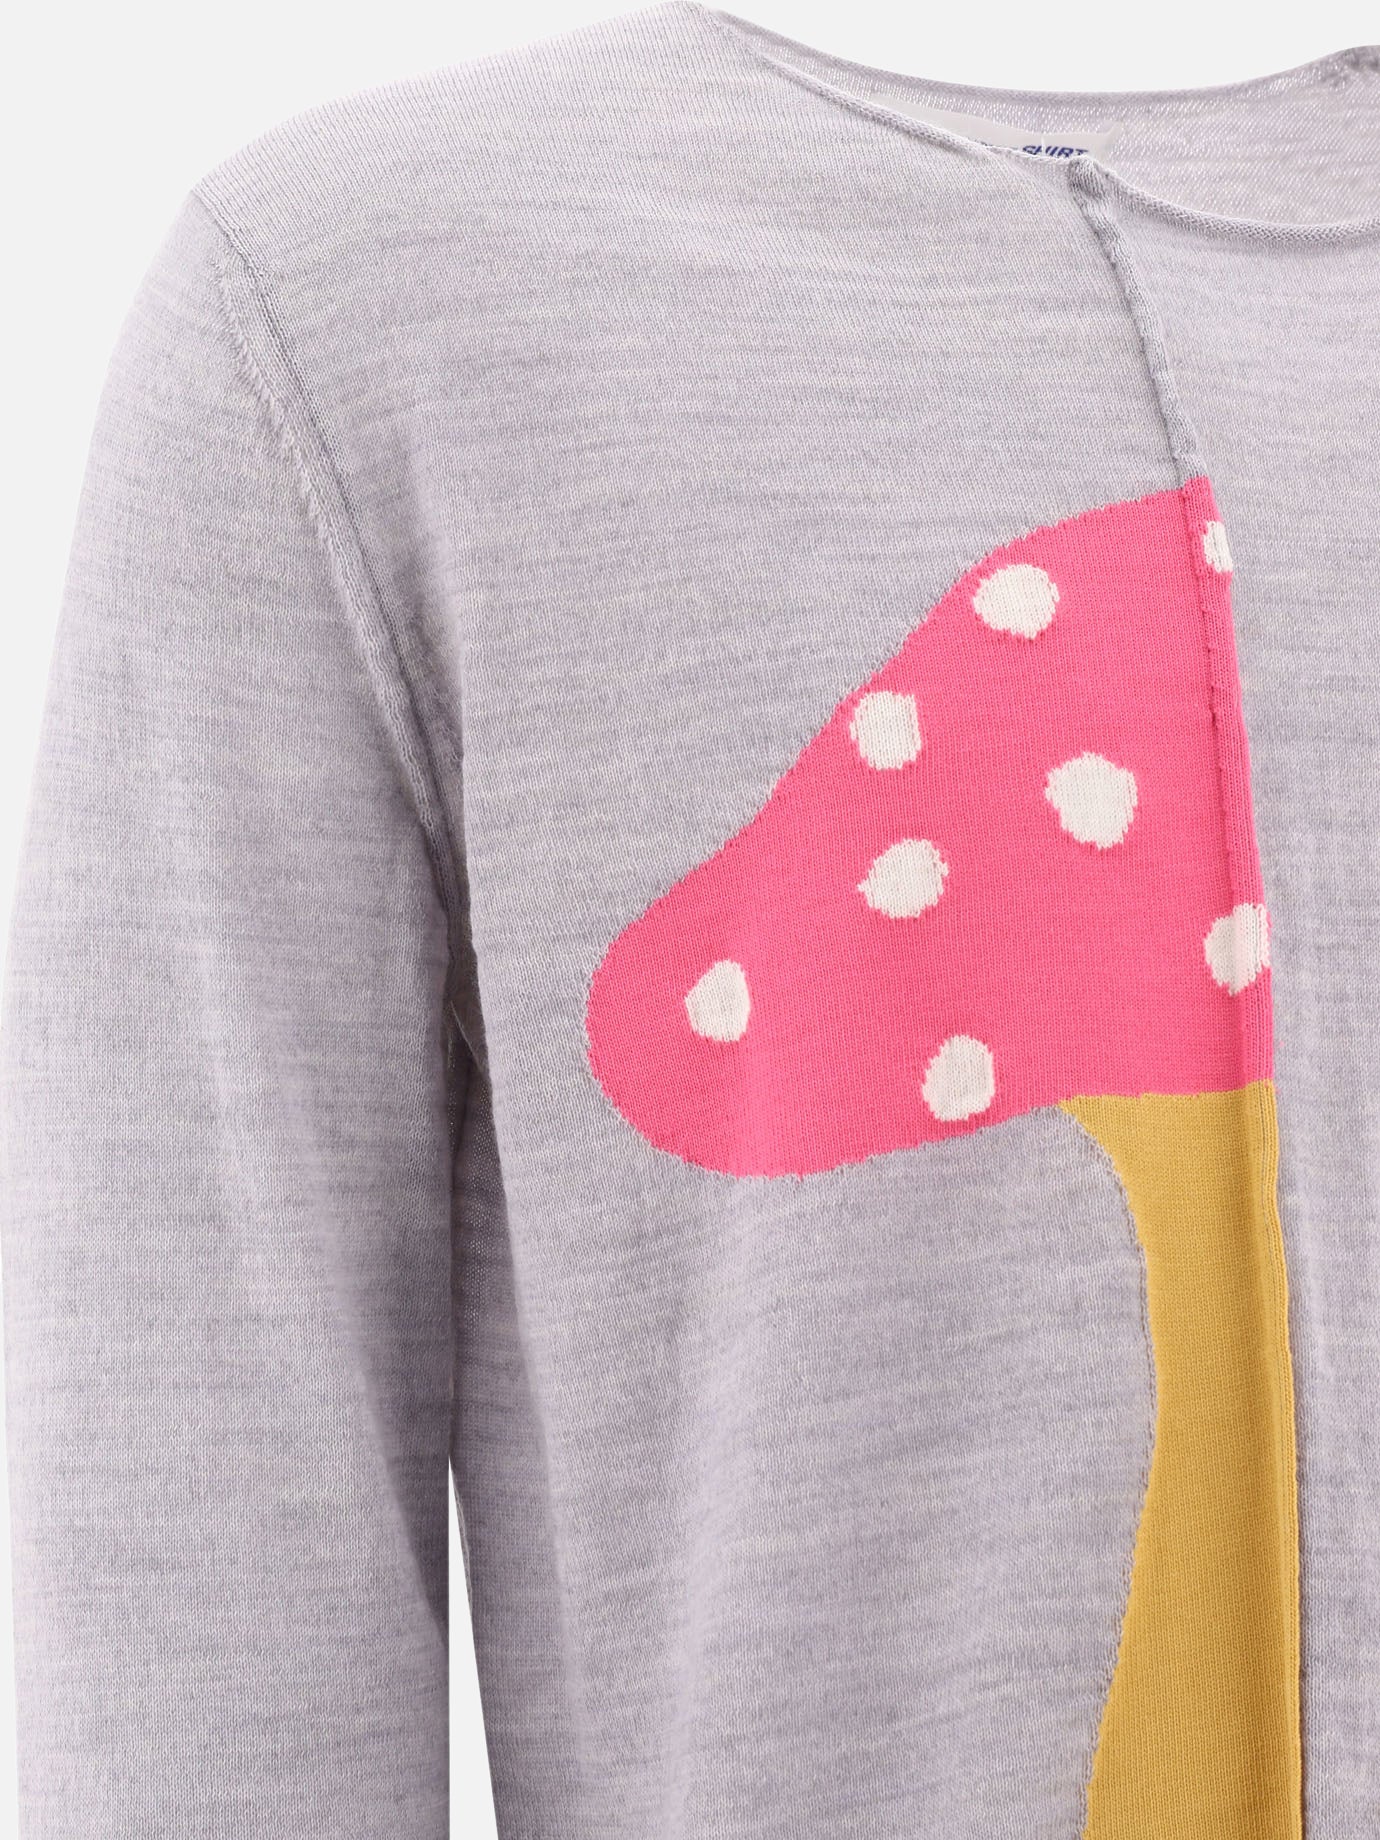 "Brett Westfall Mushroom" sweater